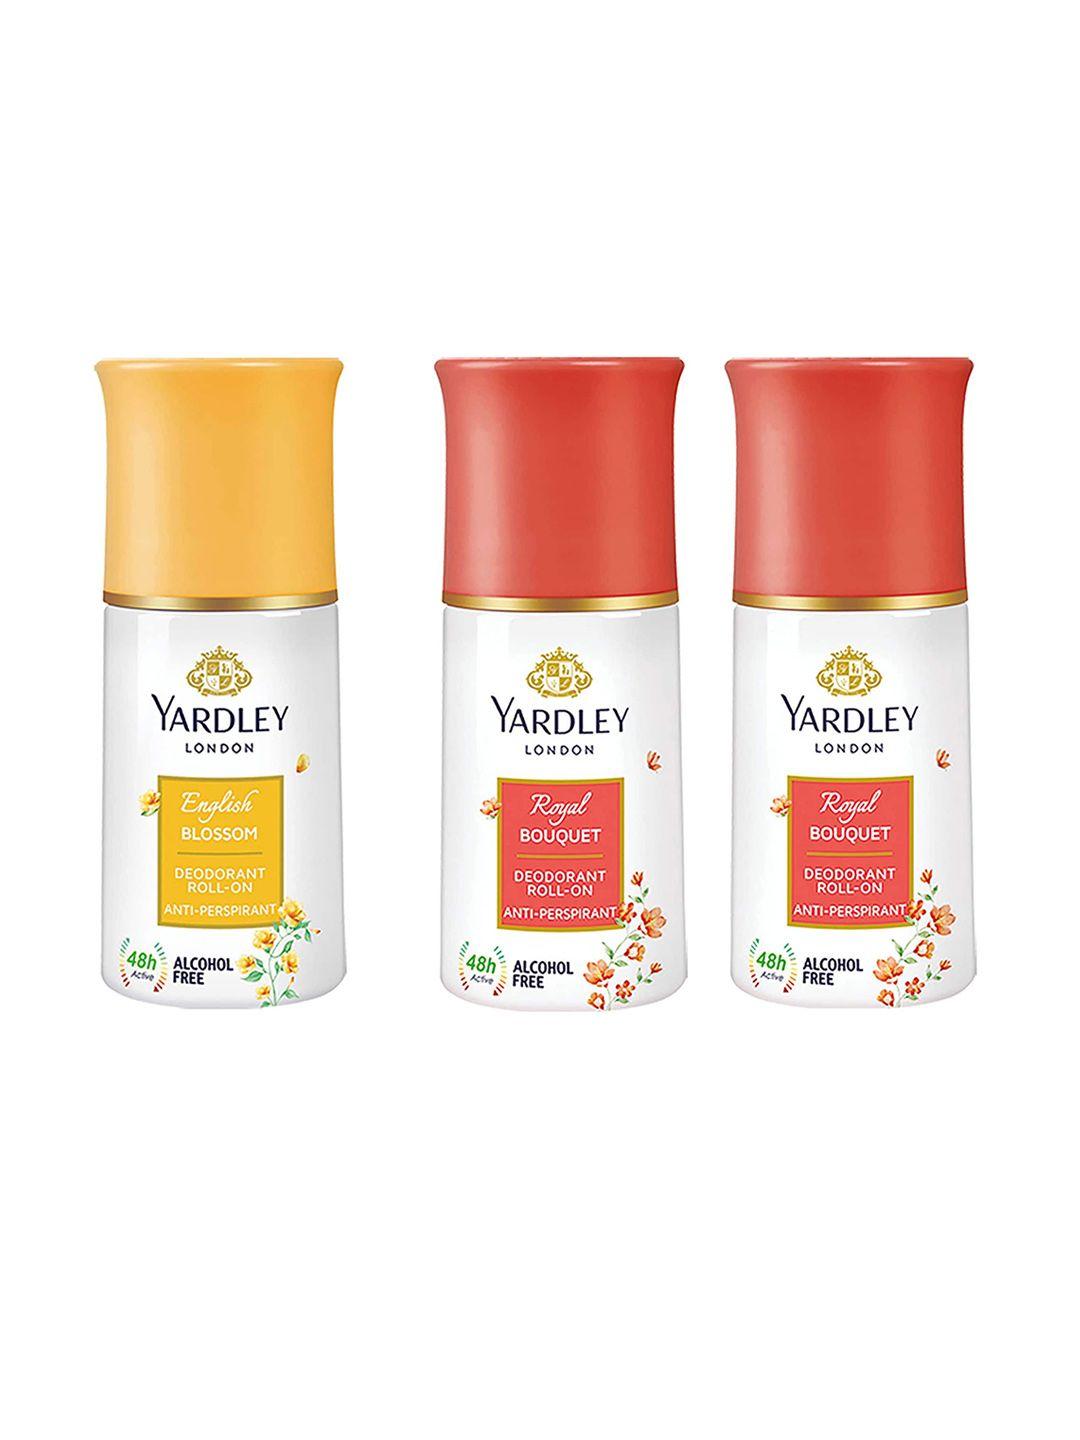 yardley london women set of 3 anti-perspirant alcohol free deodorant roll-ons - 50ml each